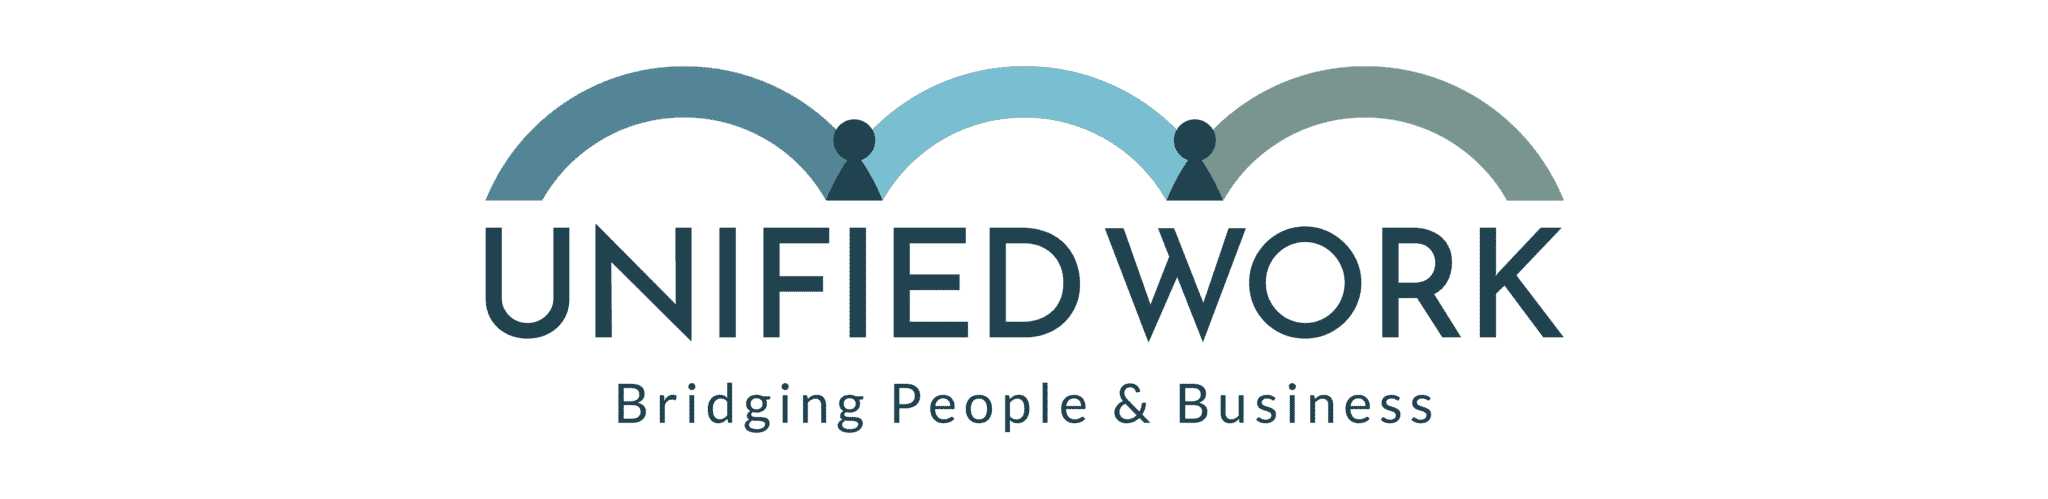 Unified Work Logo